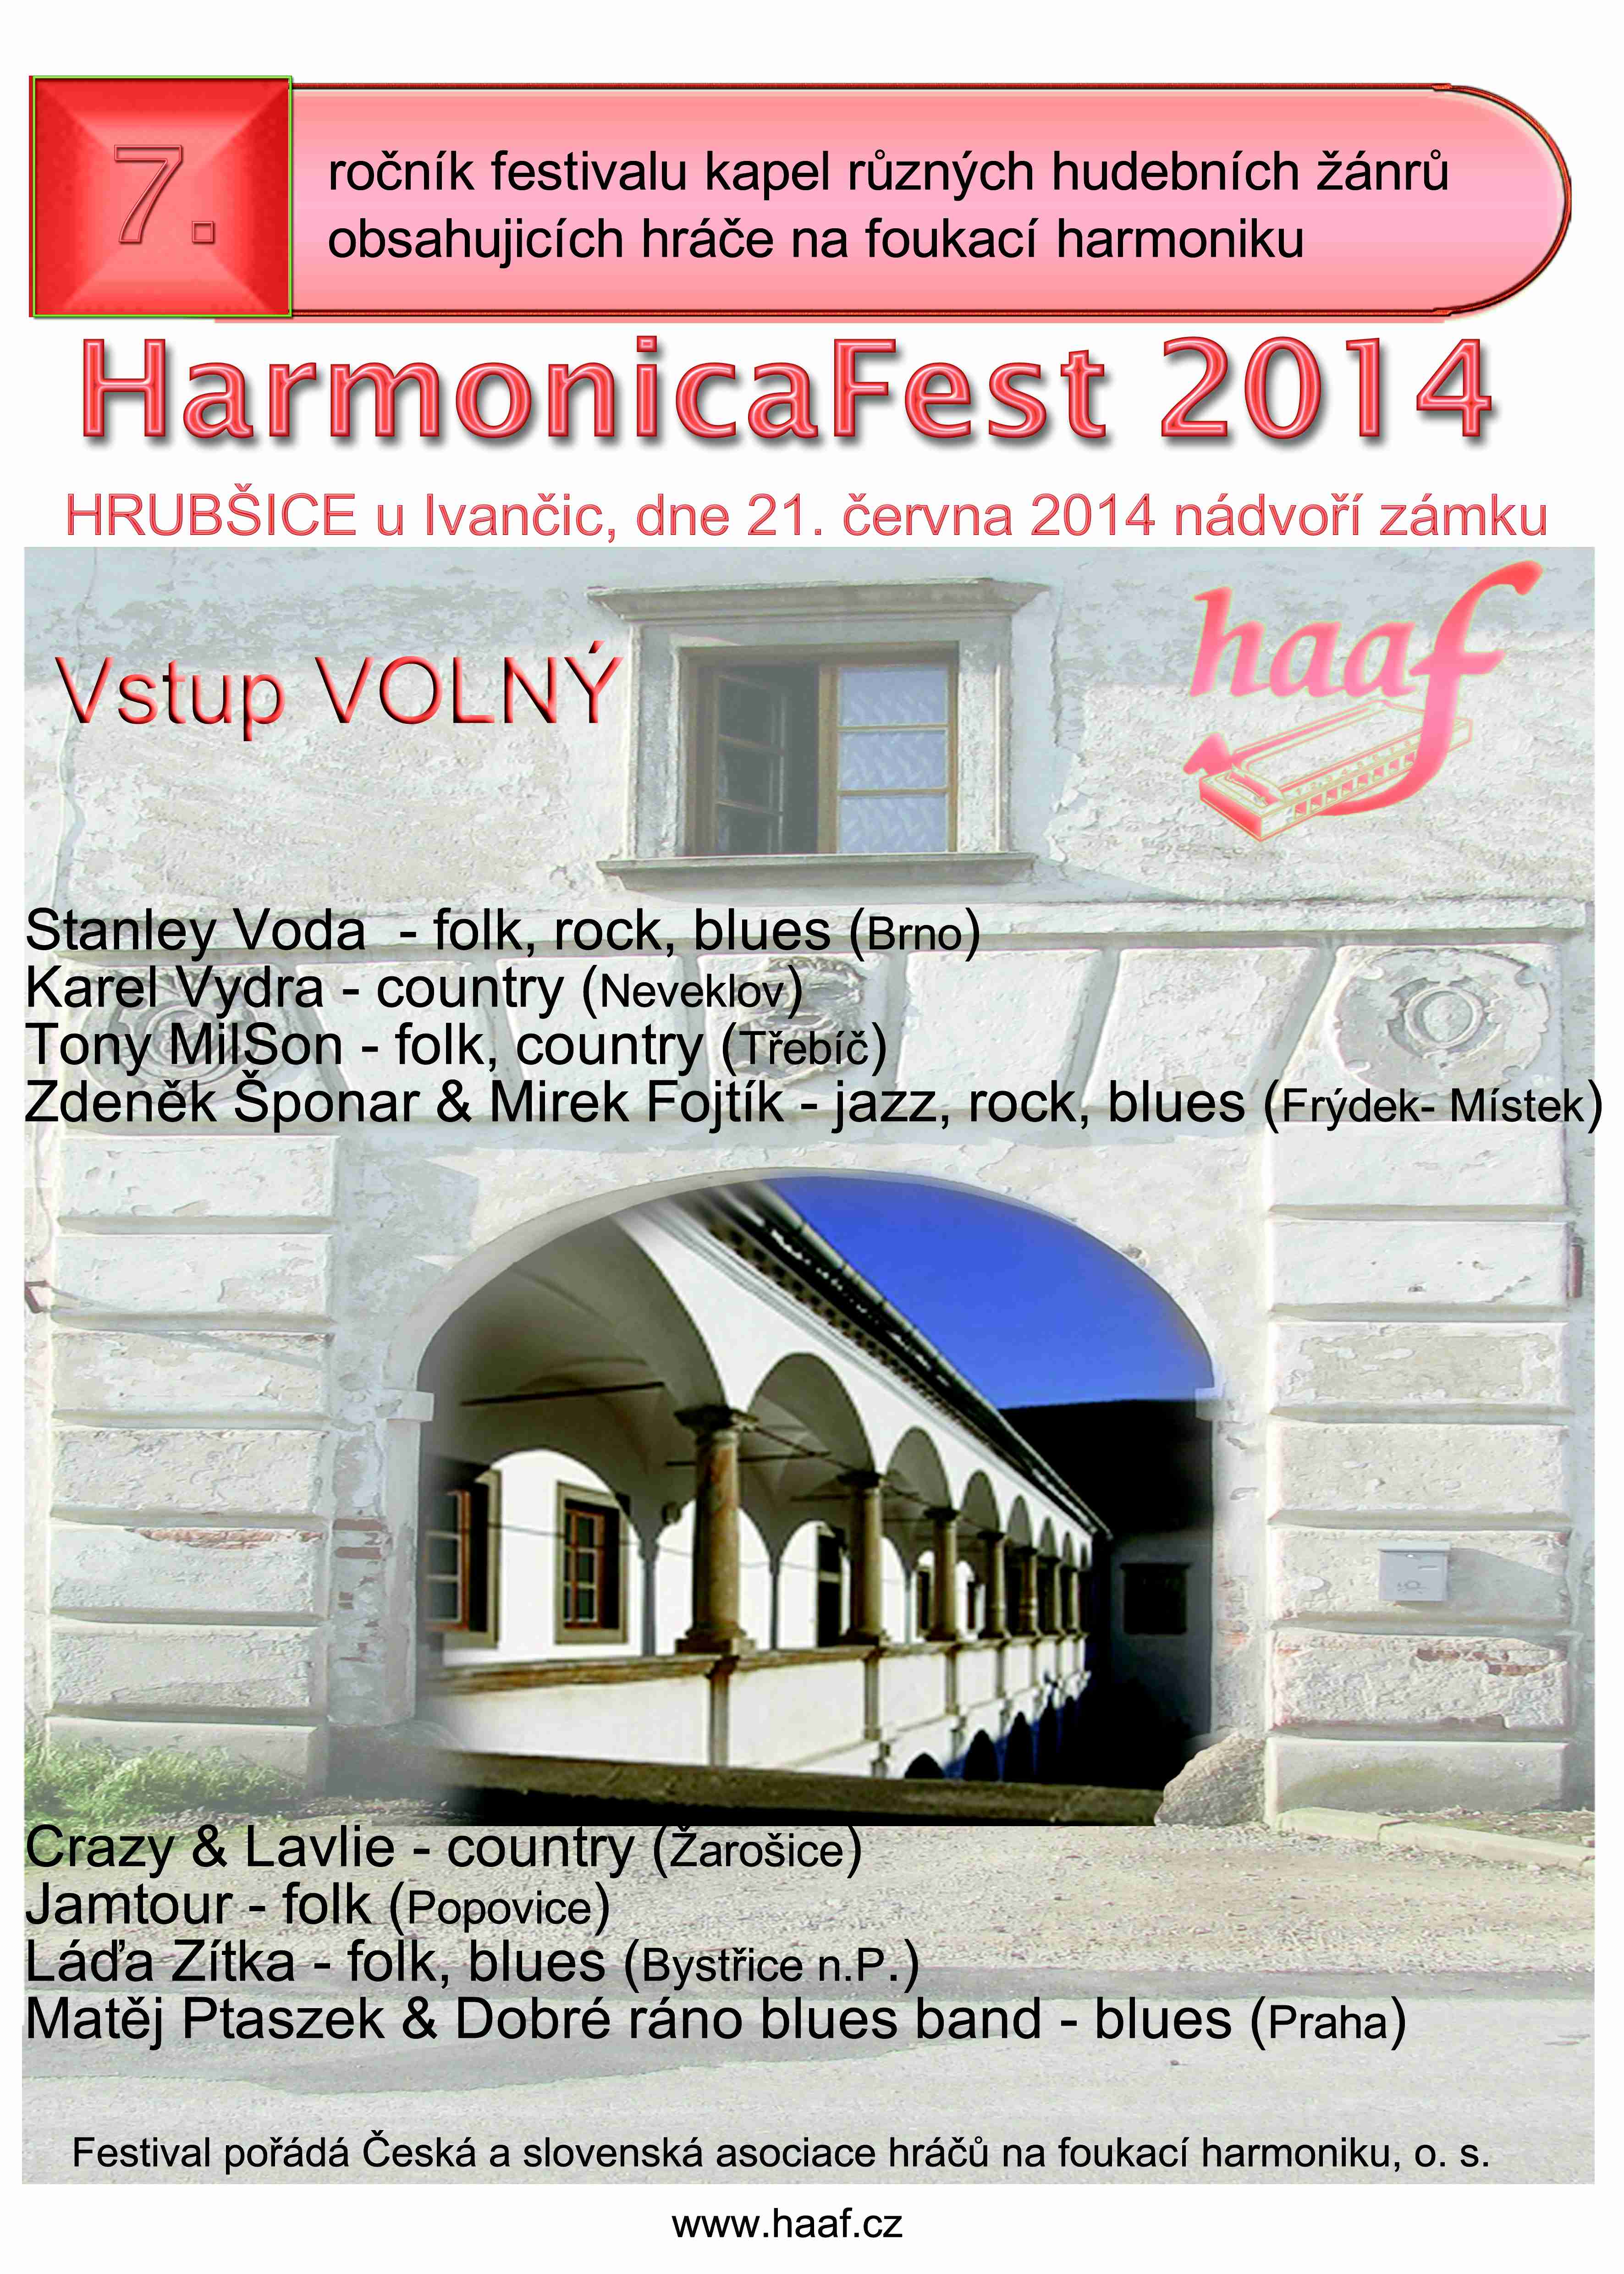 Prohram HarmonicaFest 2014